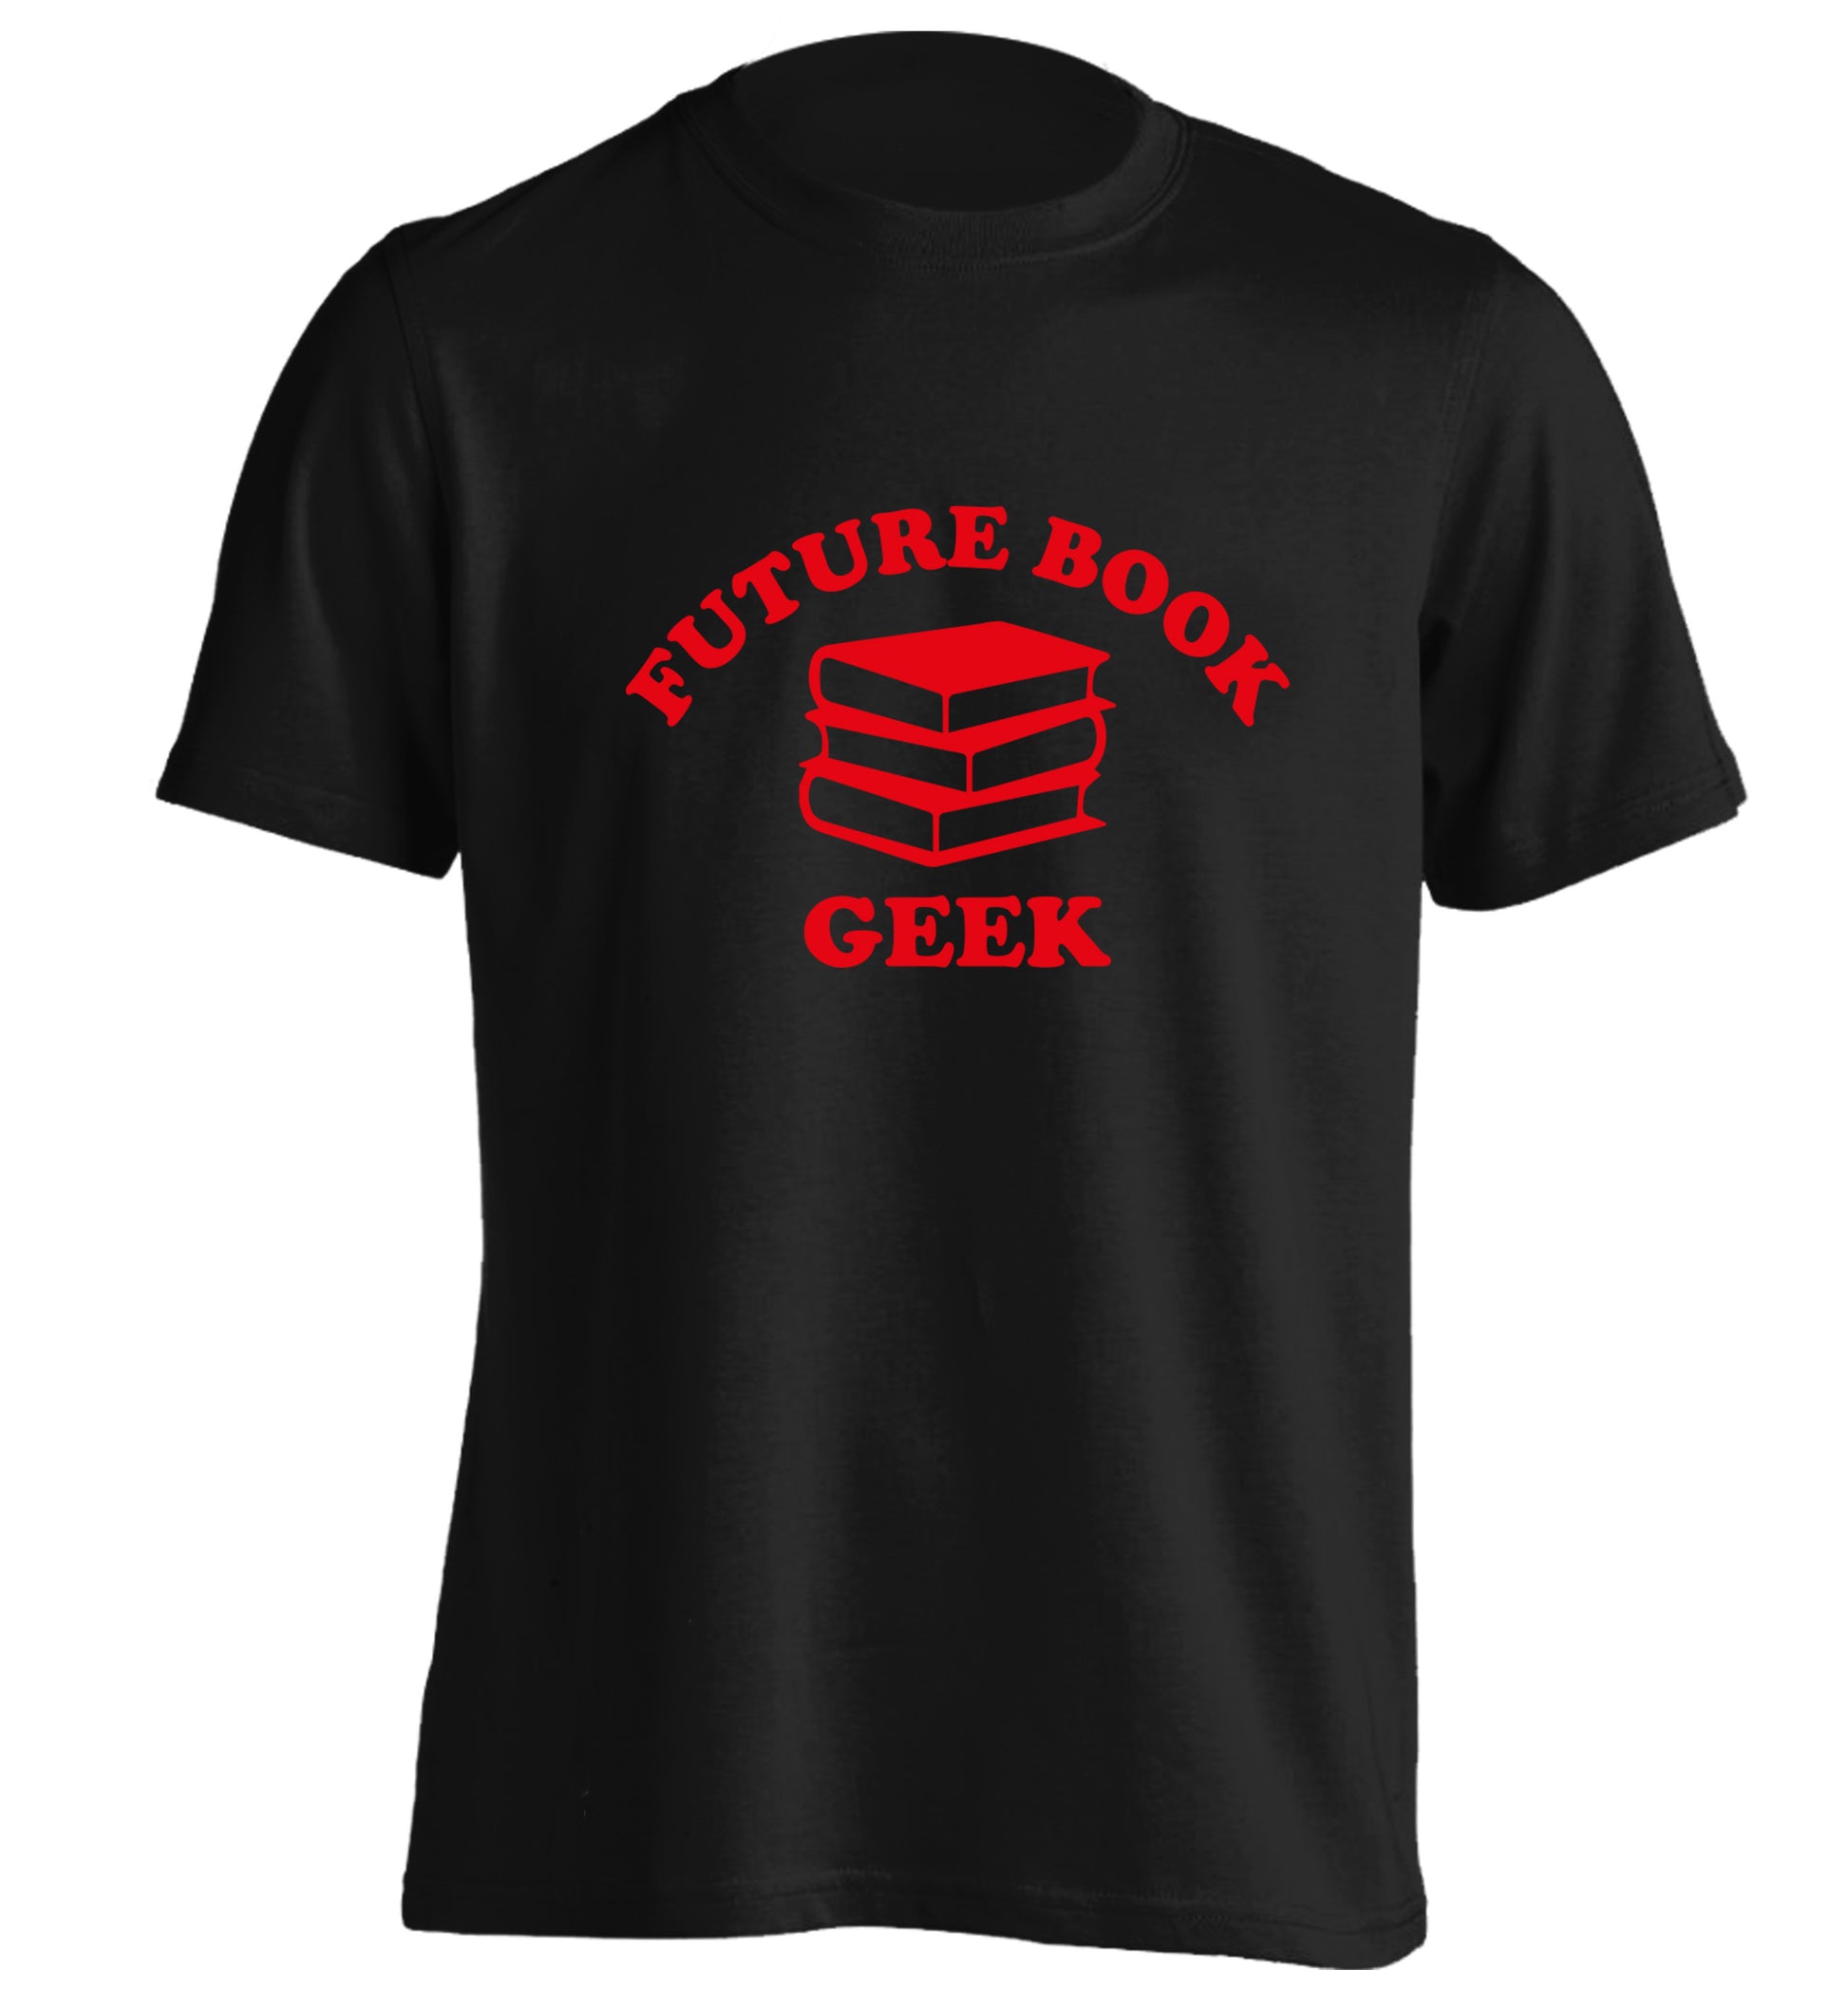 Future book geek adults unisex black Tshirt 2XL